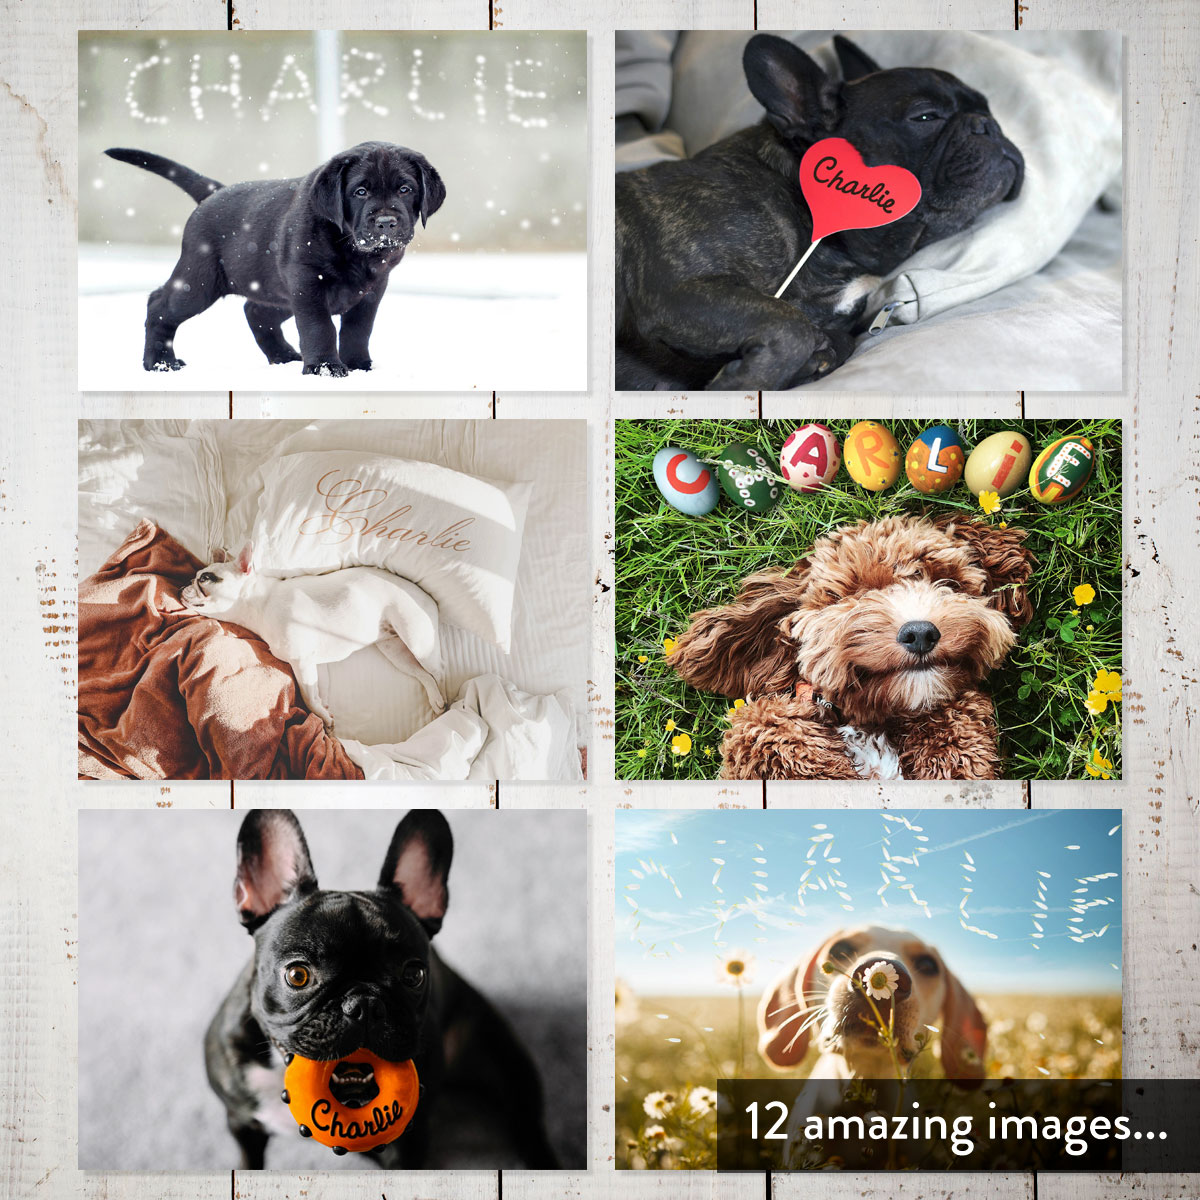 Personalised Calendar - Dogs